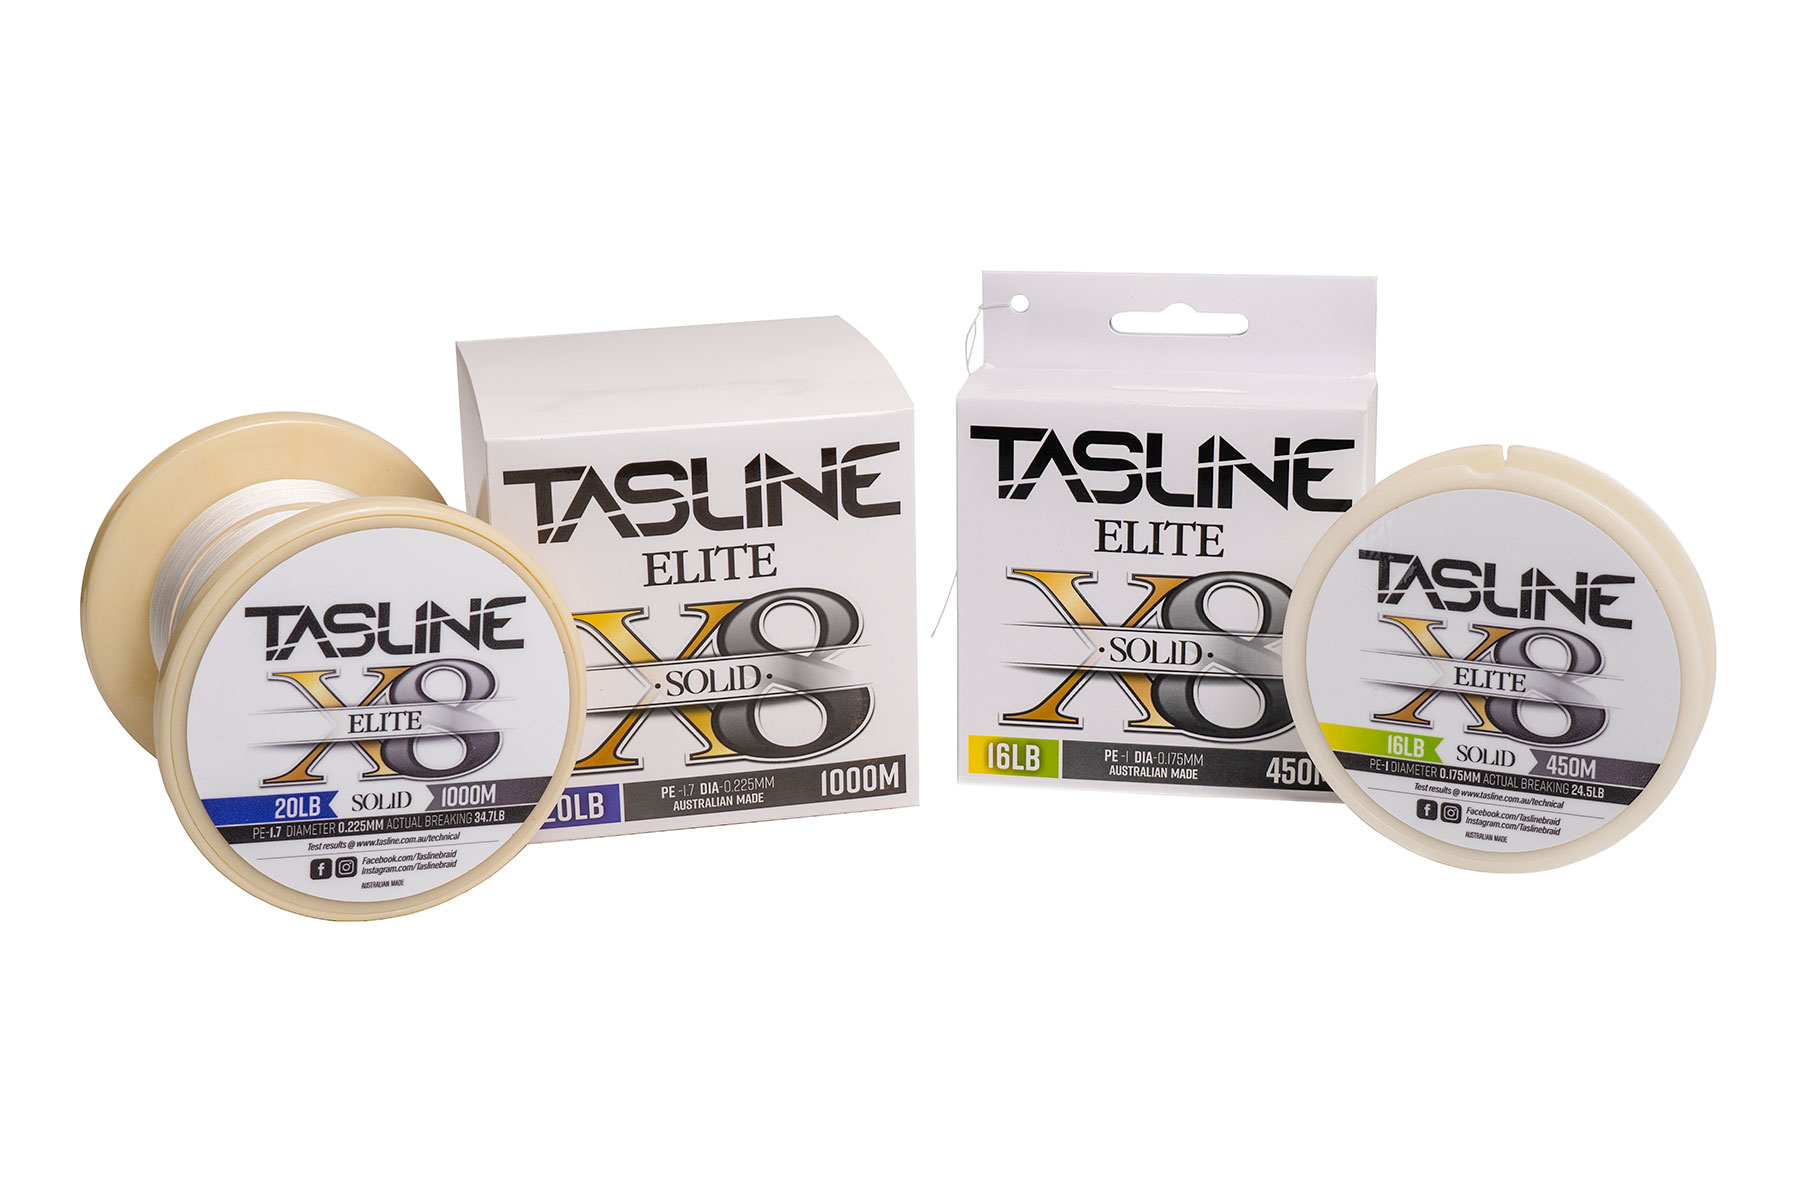 Tasline Elite White X8 300M | Free Shipping Over $99